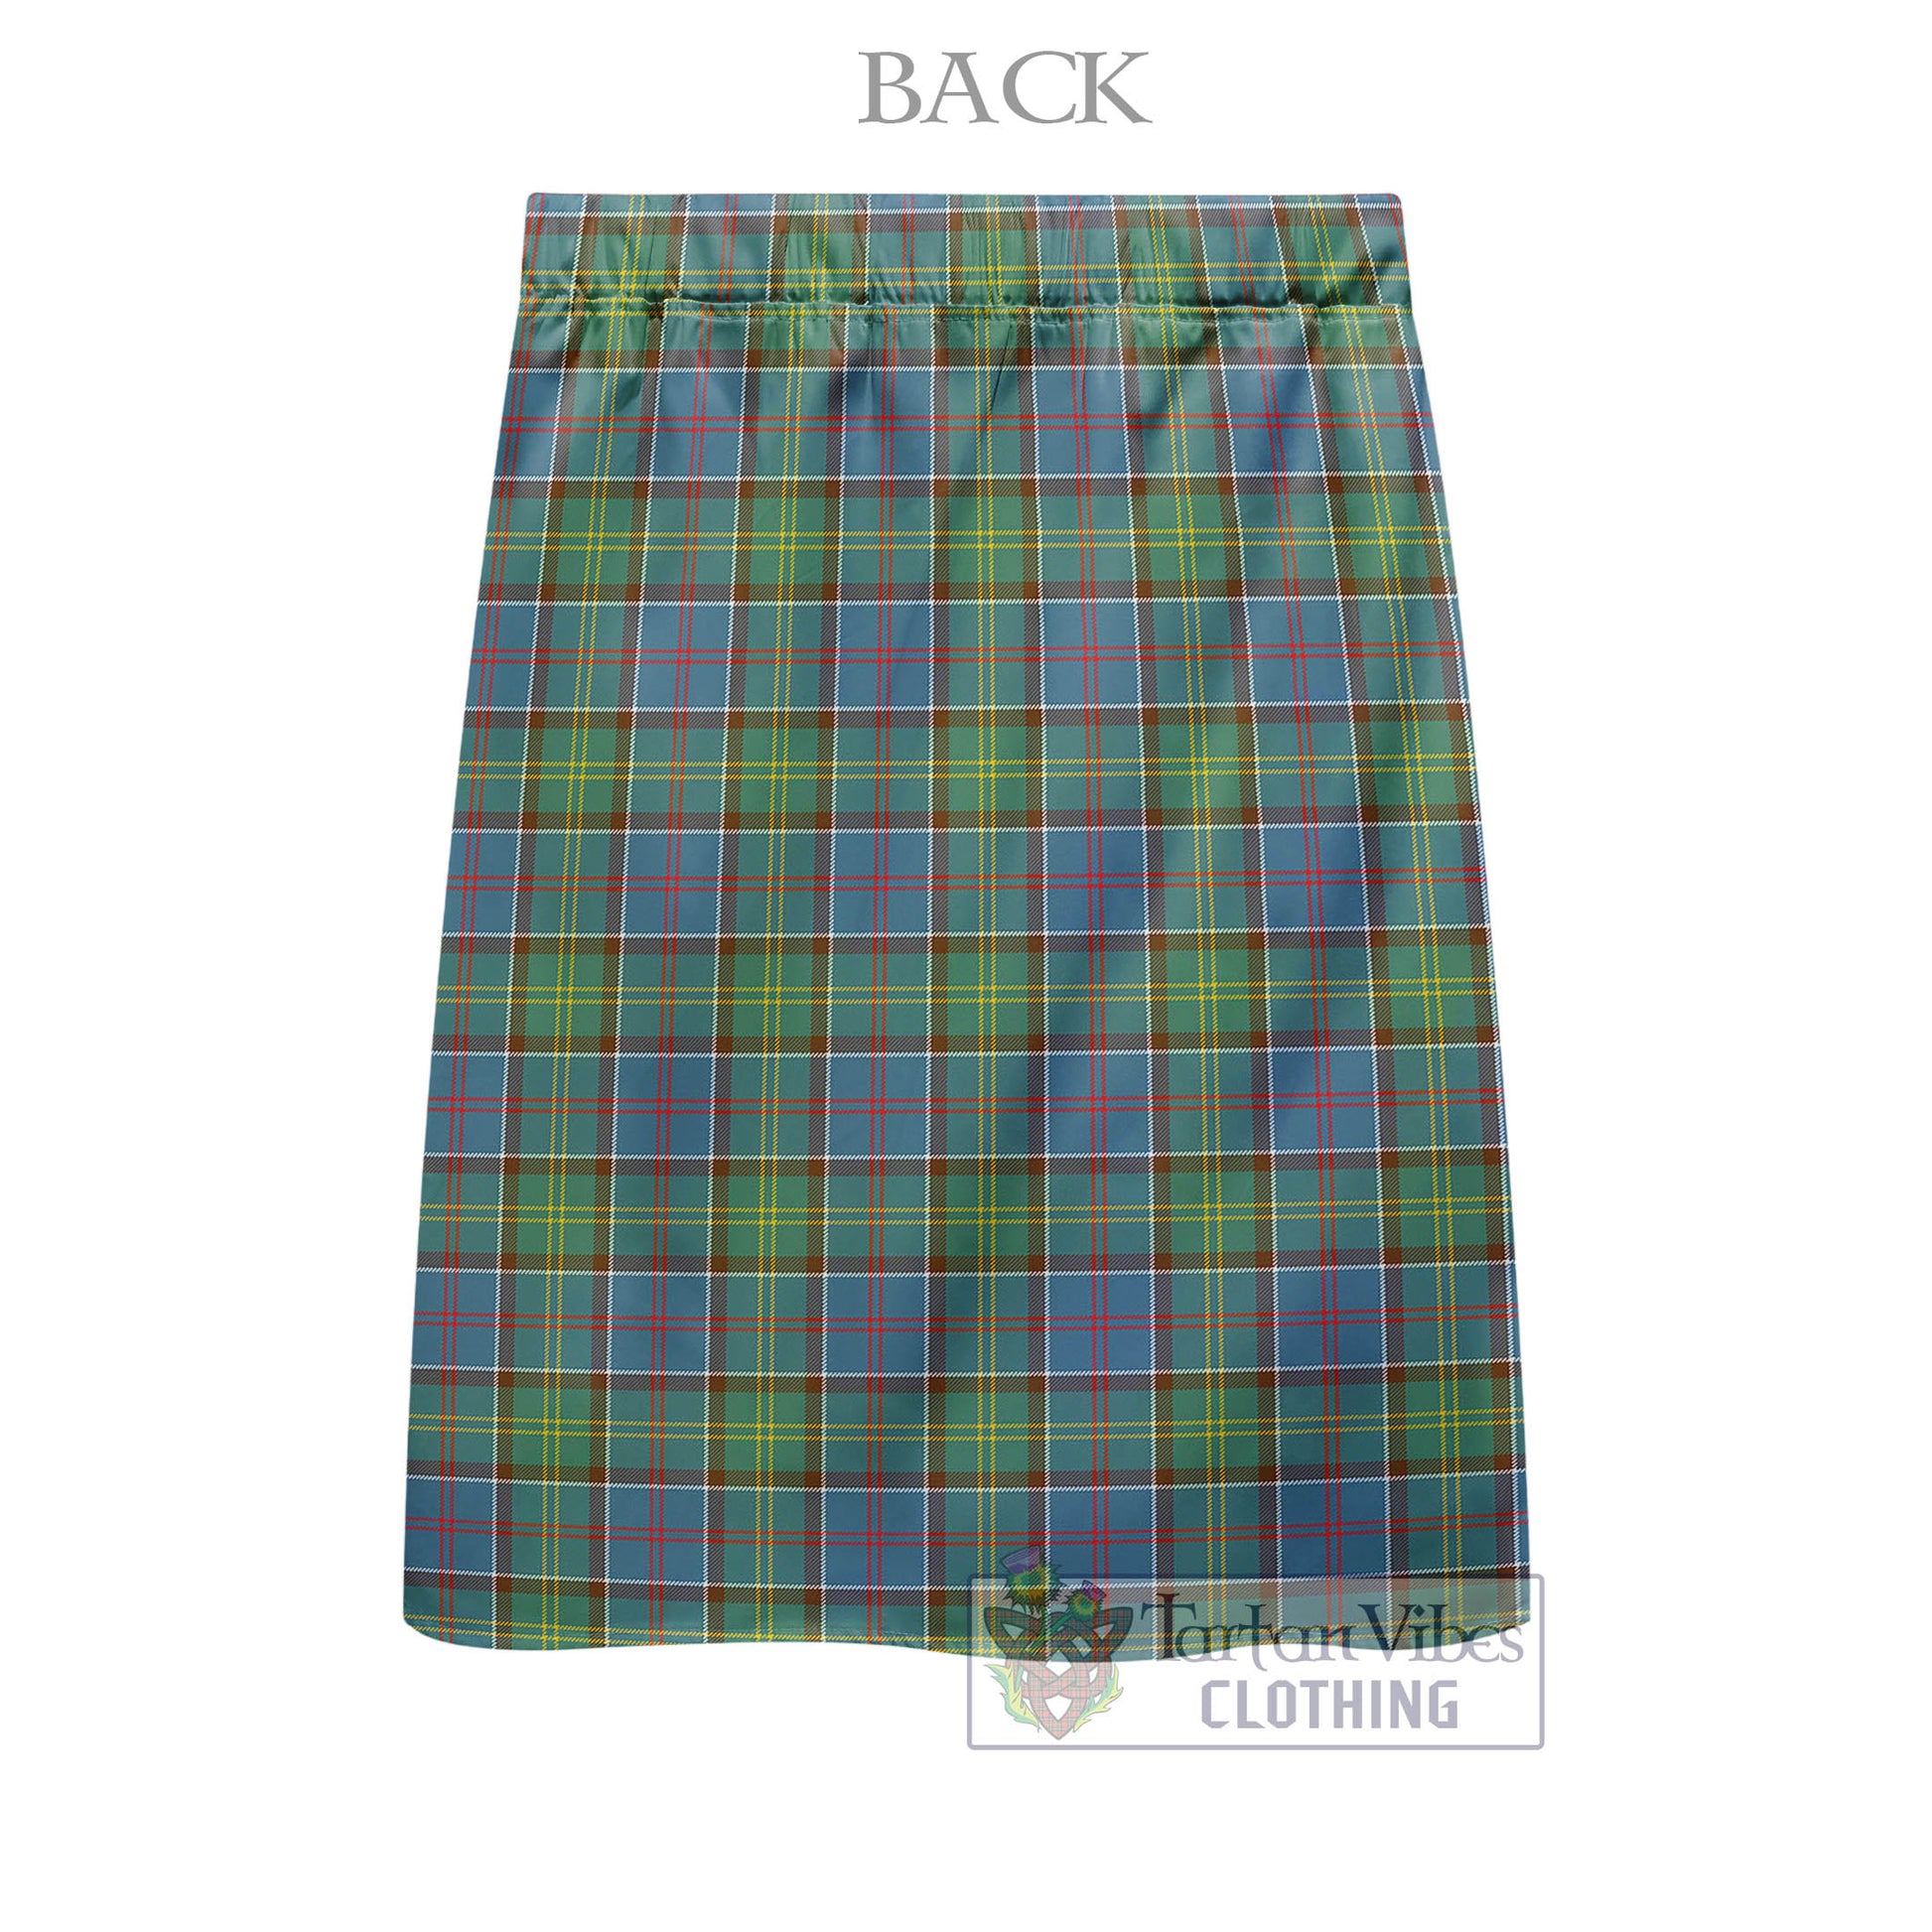 Tartan Vibes Clothing Whitelaw Tartan Men's Pleated Skirt - Fashion Casual Retro Scottish Style